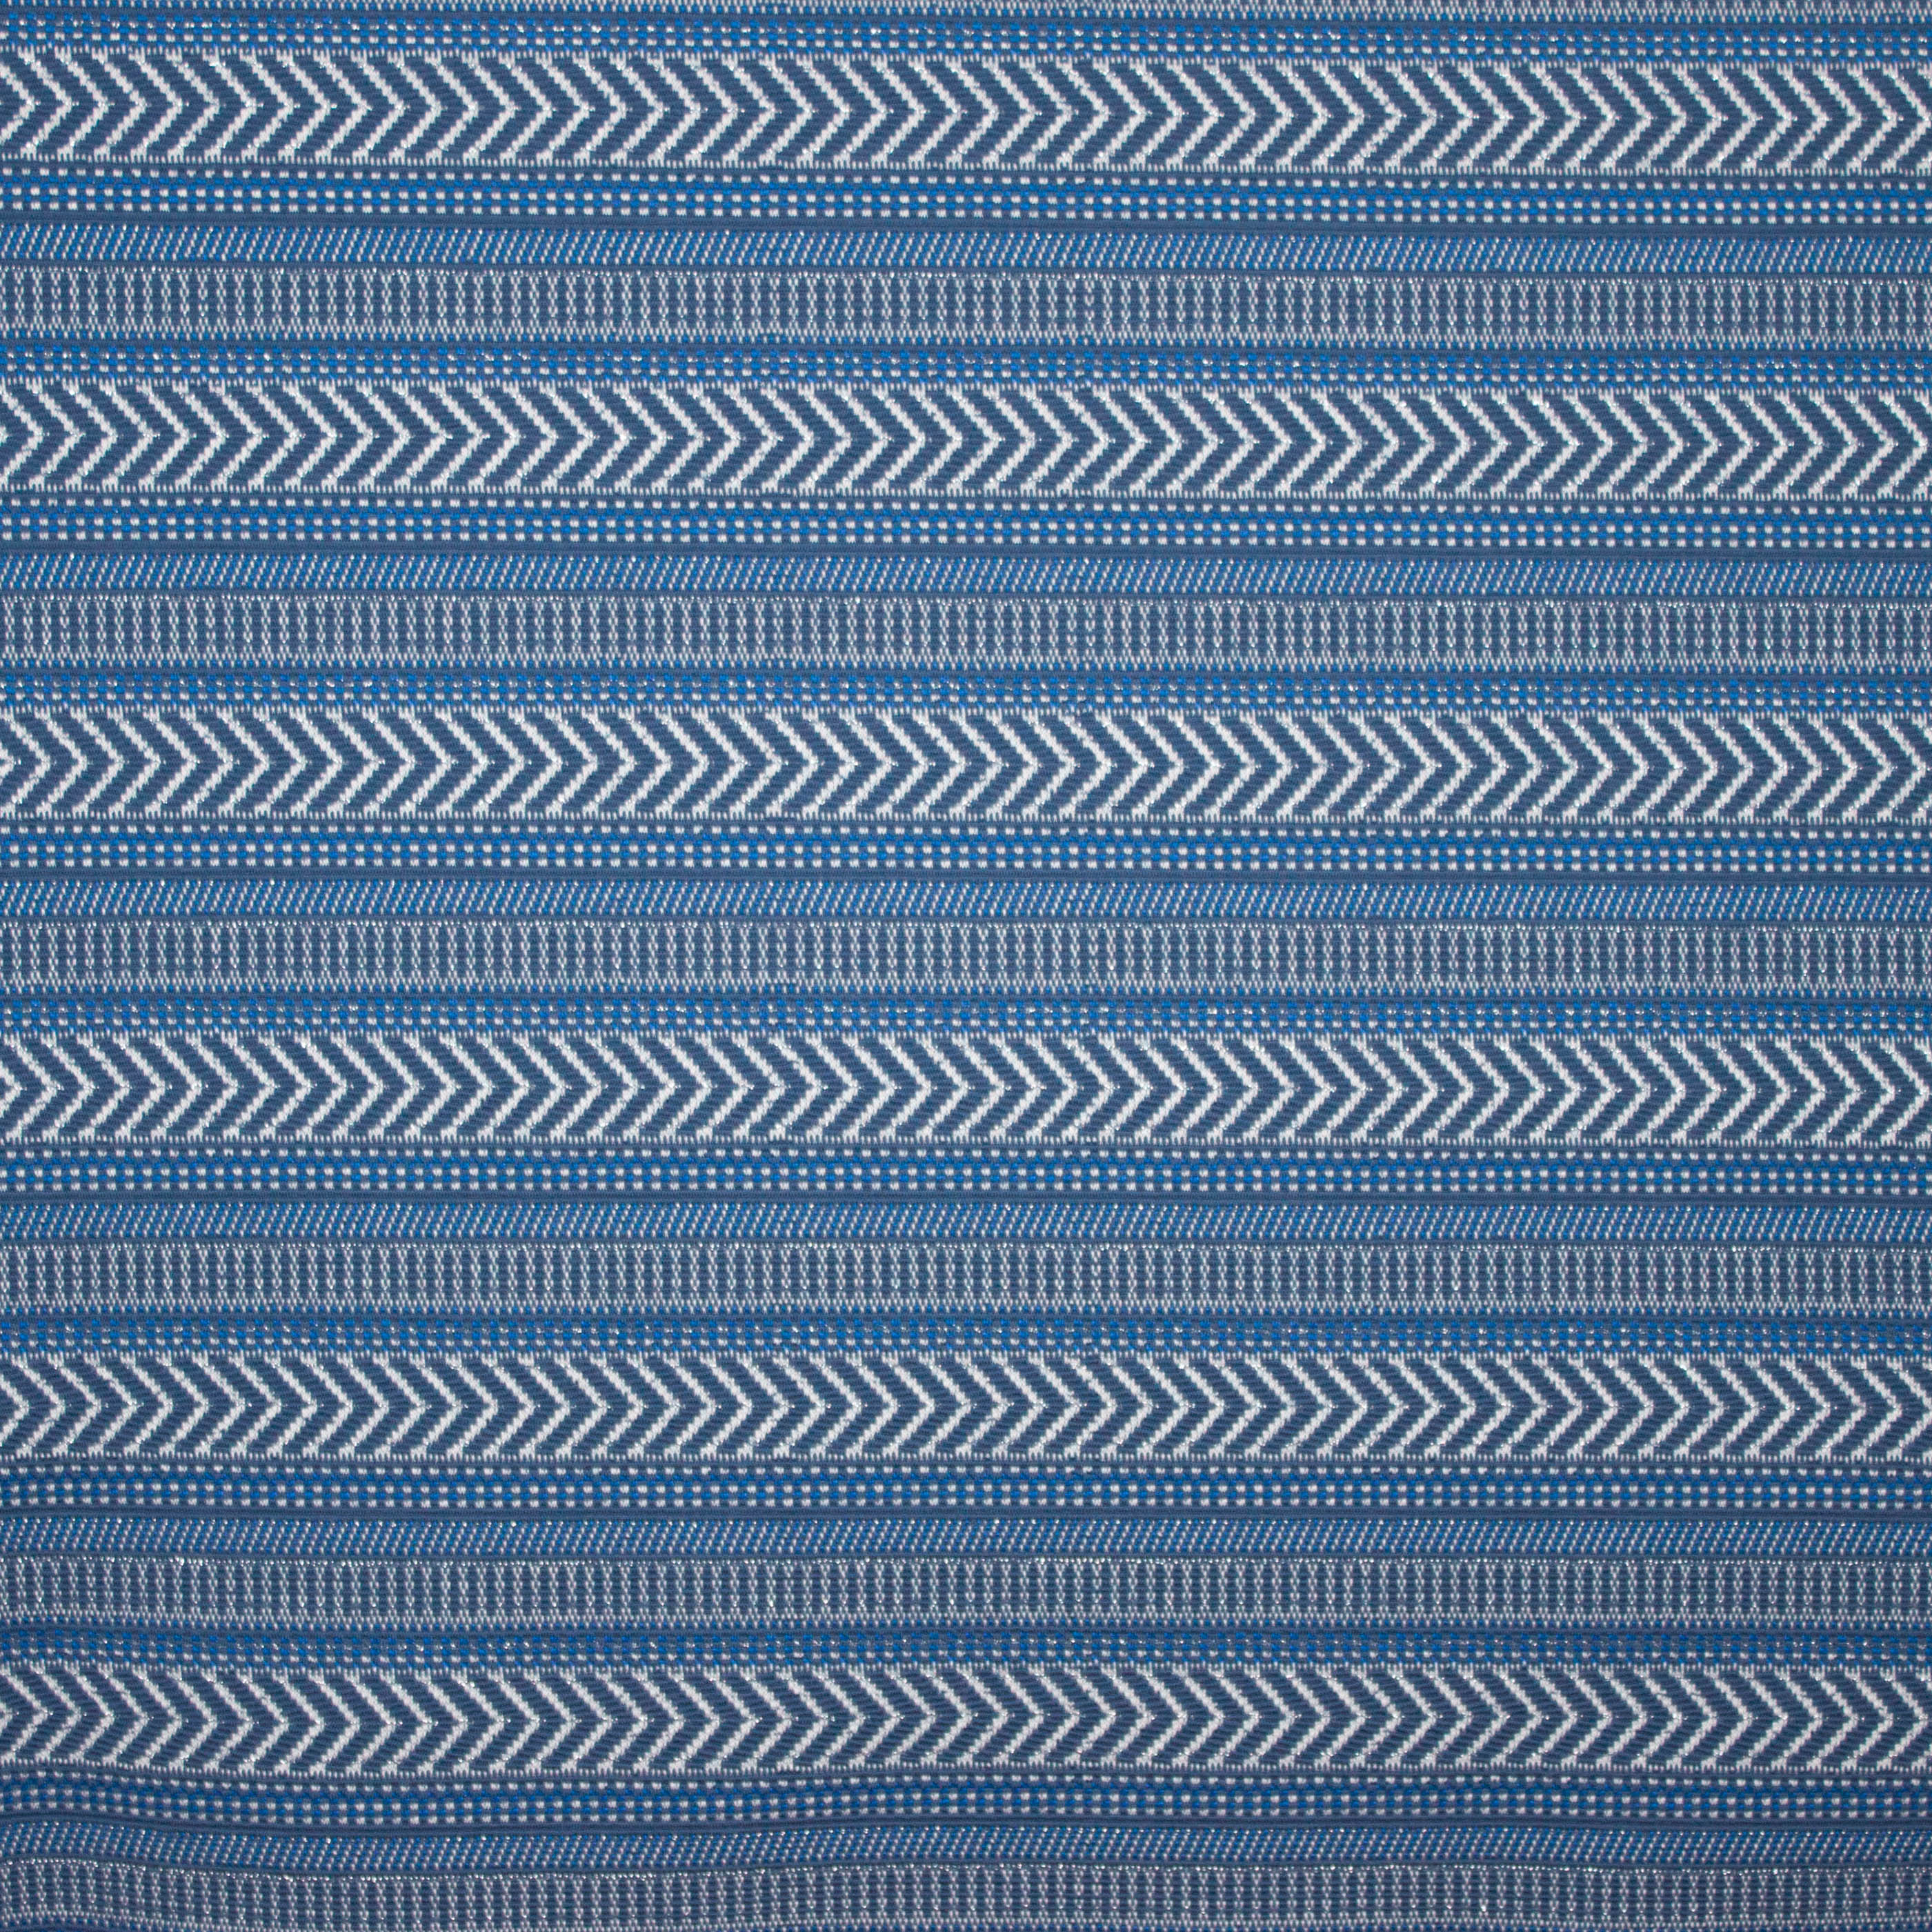 Blauwe jacquard met geometrisch patroon